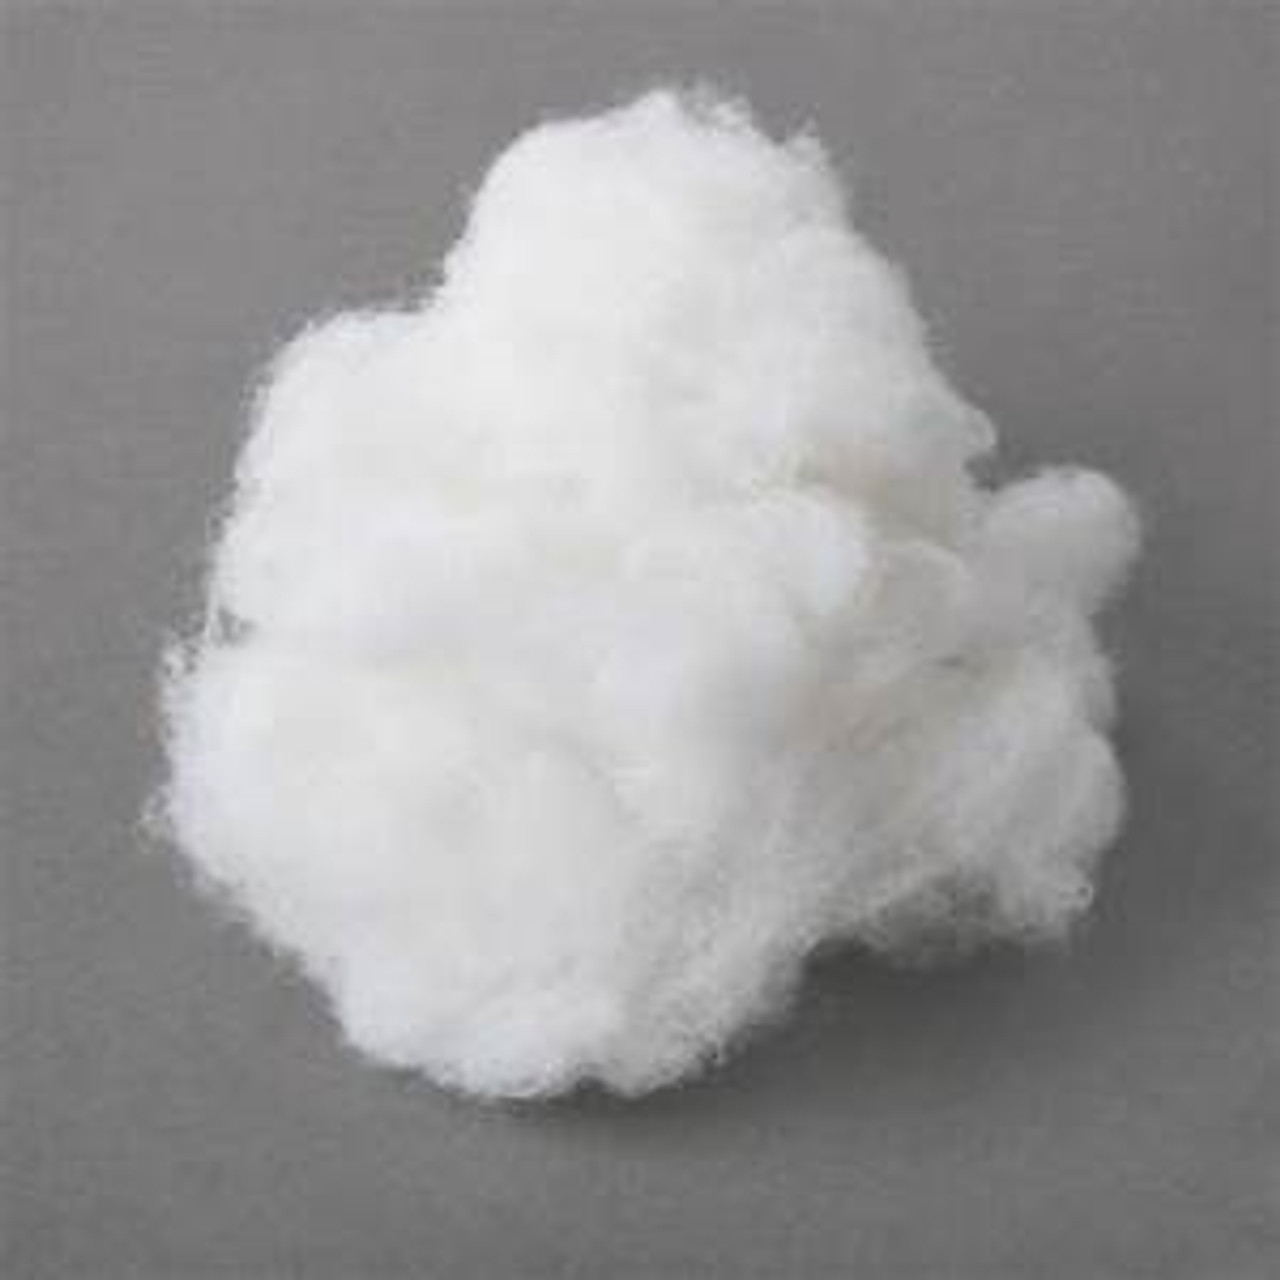 1000g High Quality Pearl Cotton Environmental Stuffing Fiber